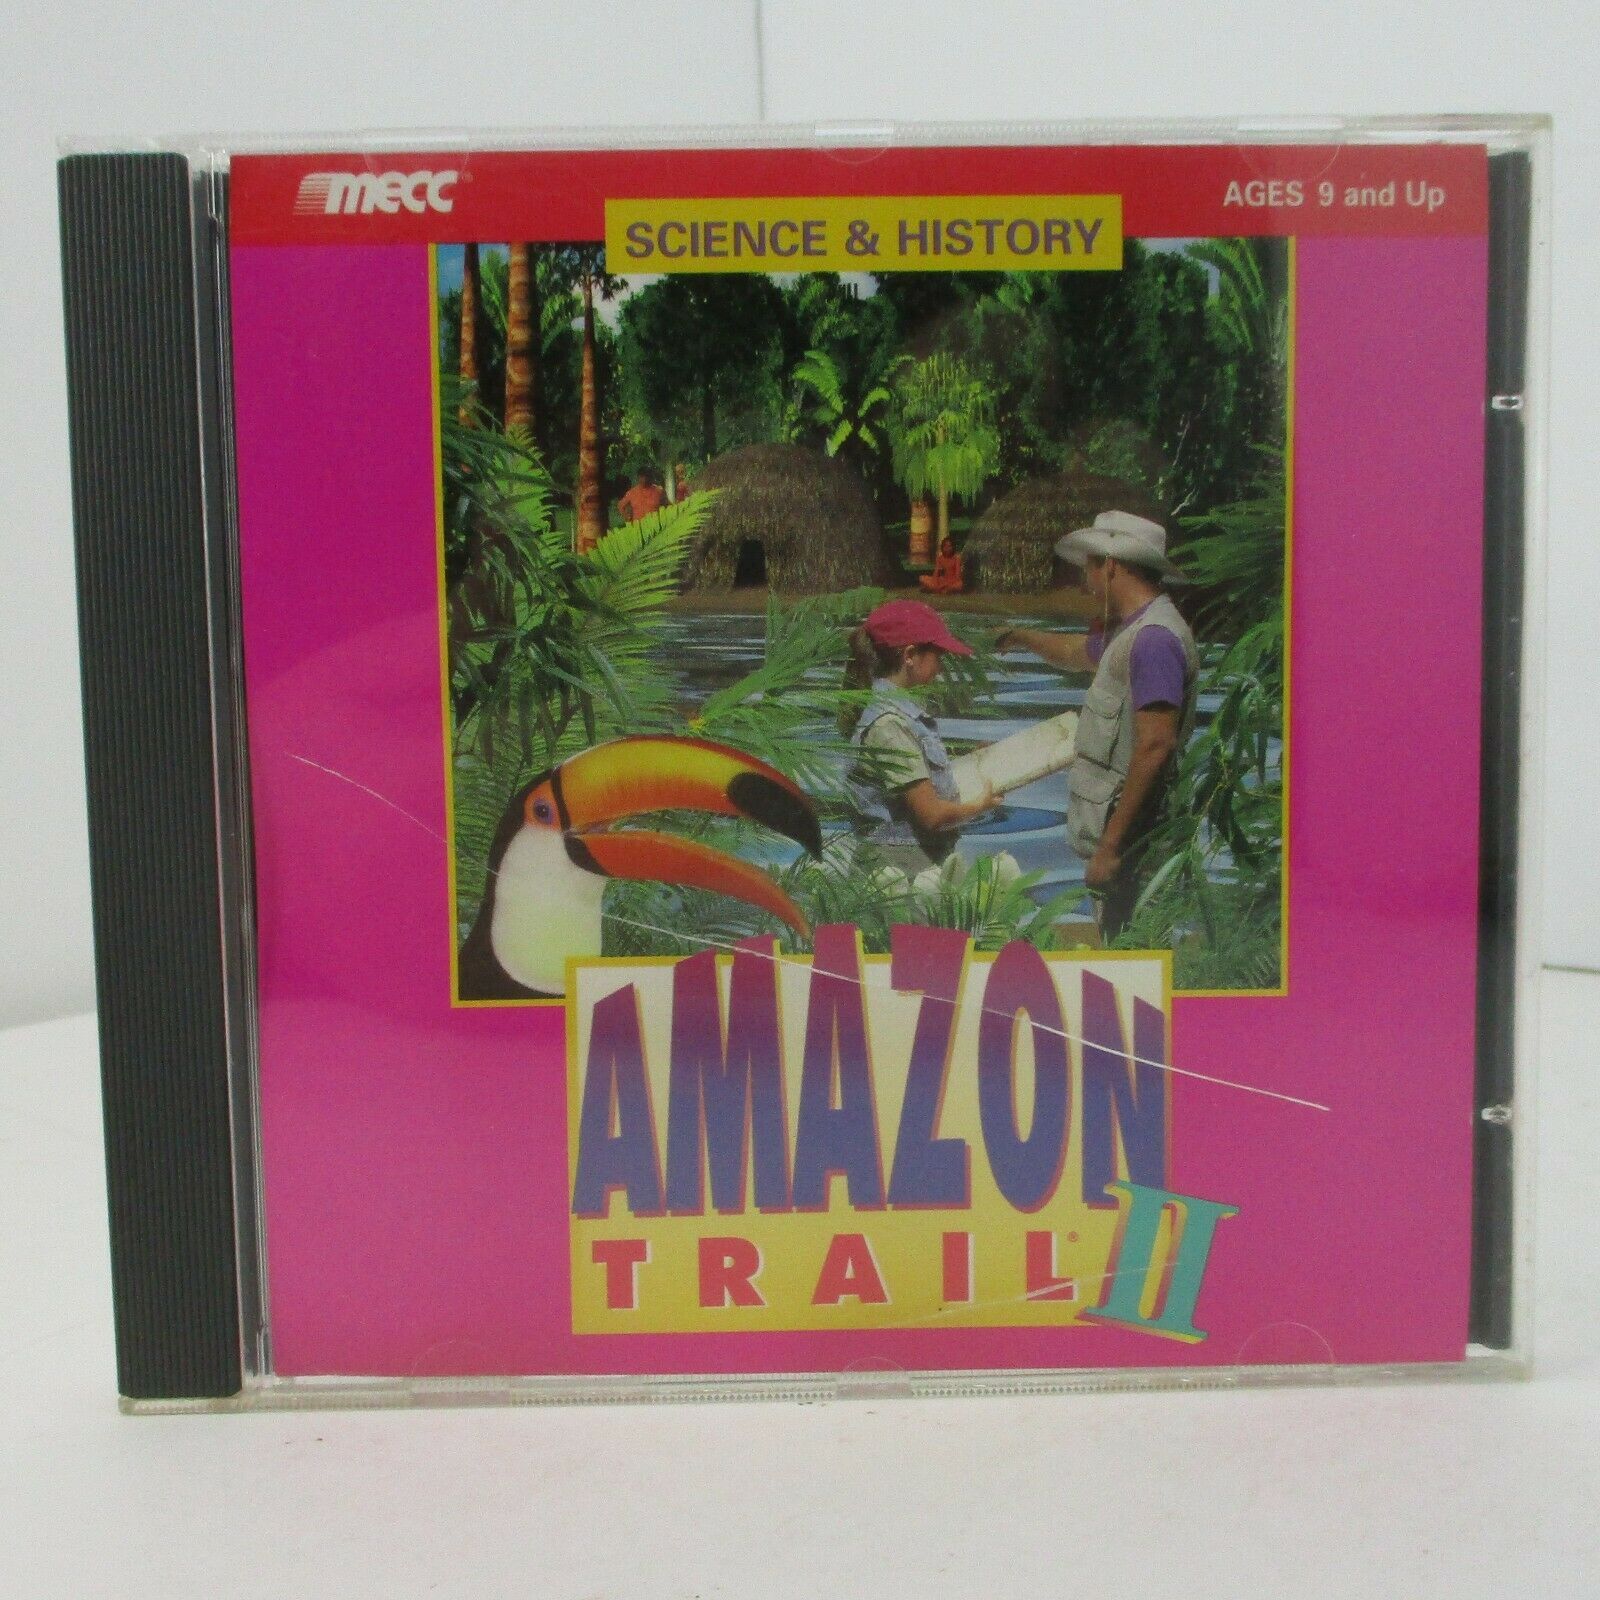 Amazon Trail II PC for Windows 95, 98 Windows/Mac 1997 Science & History Game - $6.91